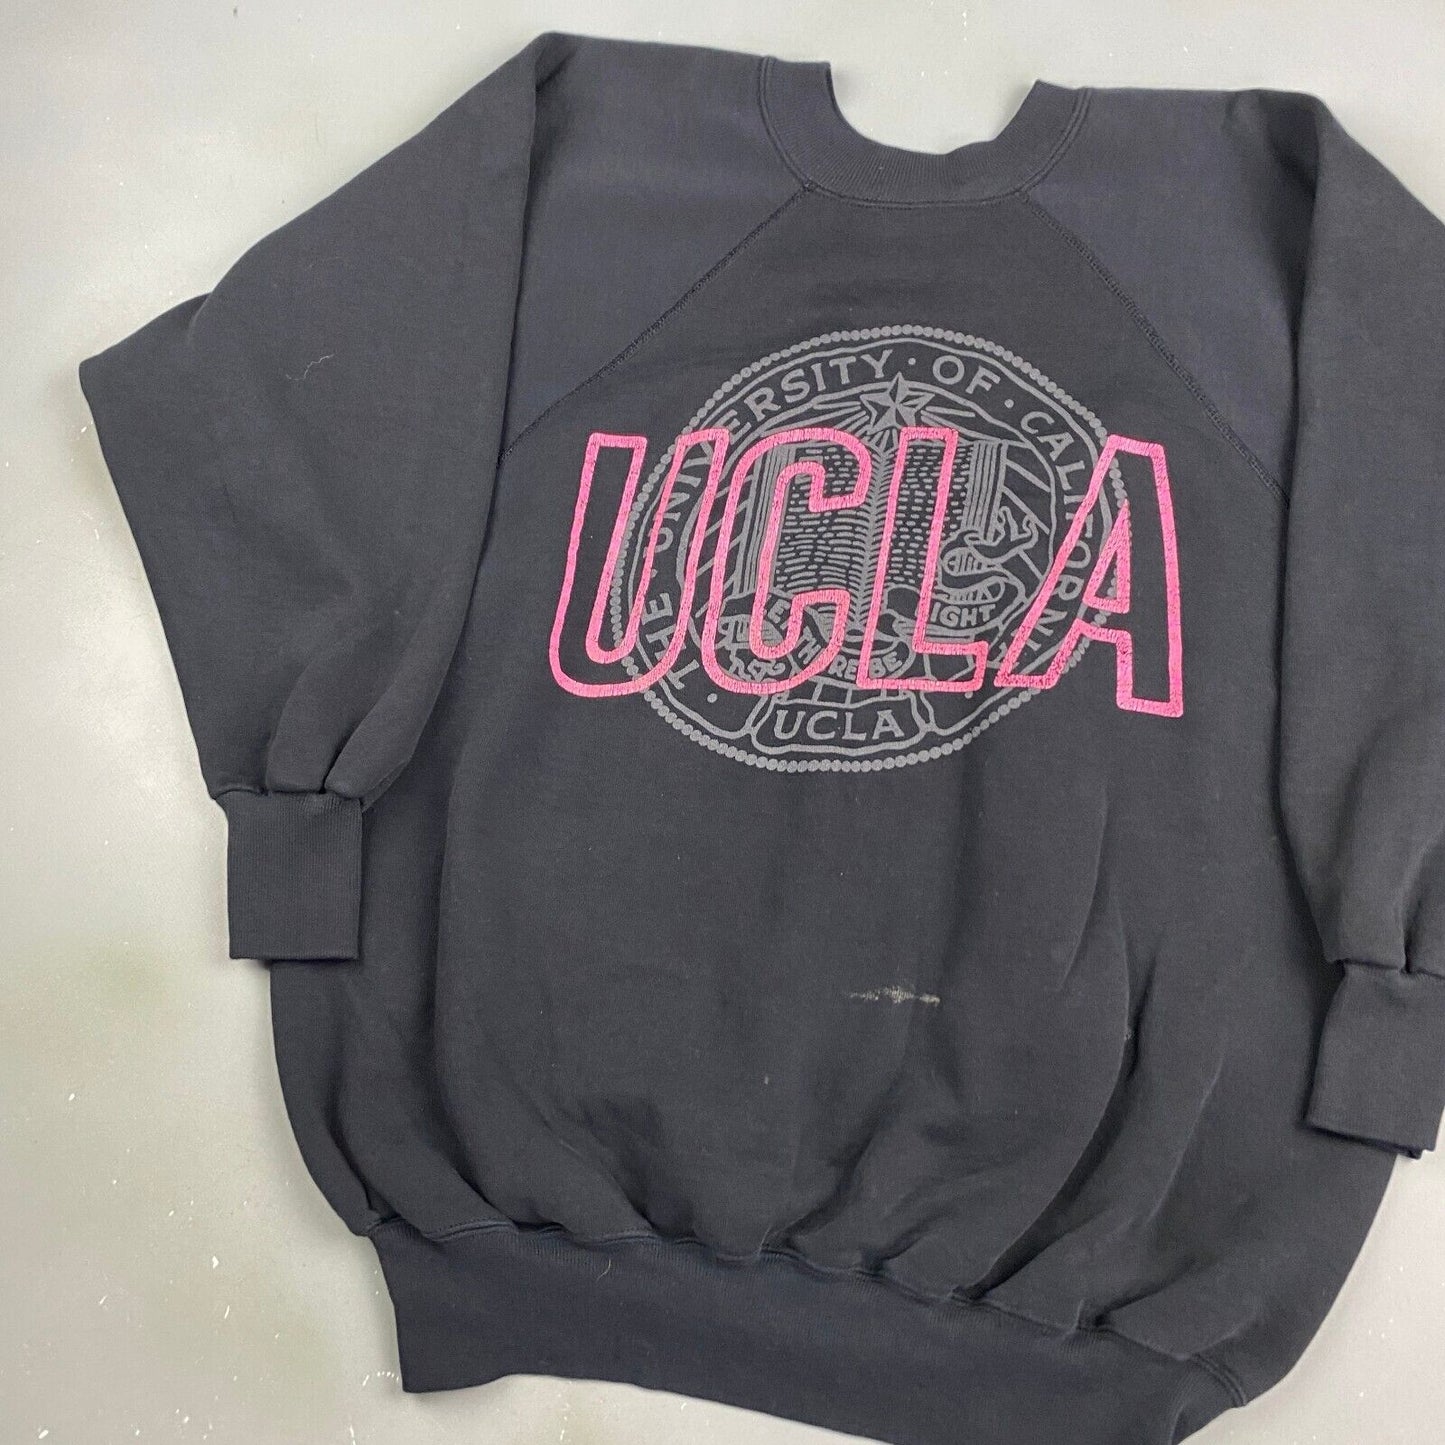 VINTAGE 80s University Of California UCLA Crewneck Sweater sz Large Men Adult